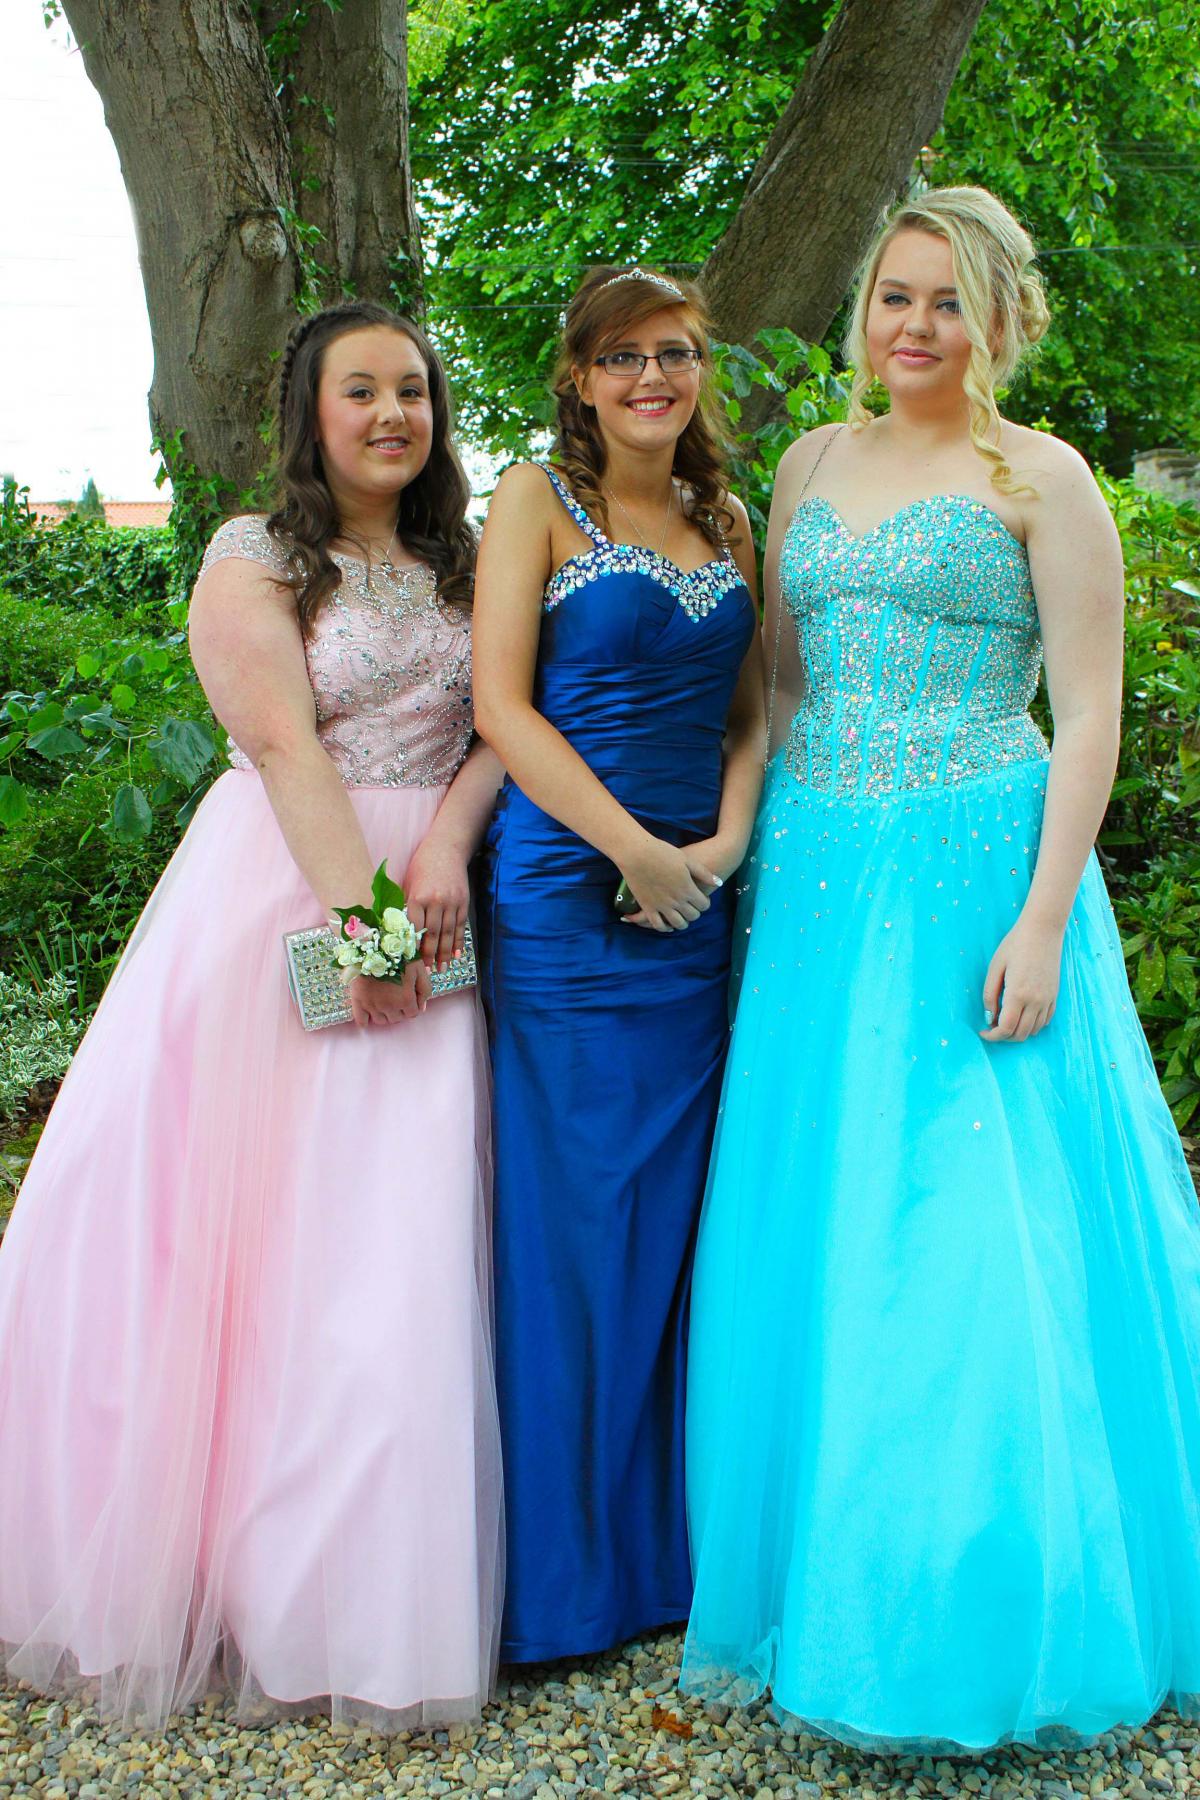 Faith Nicholls, 15, Kaitlyn Stewart, 16 and Bethany King, 16